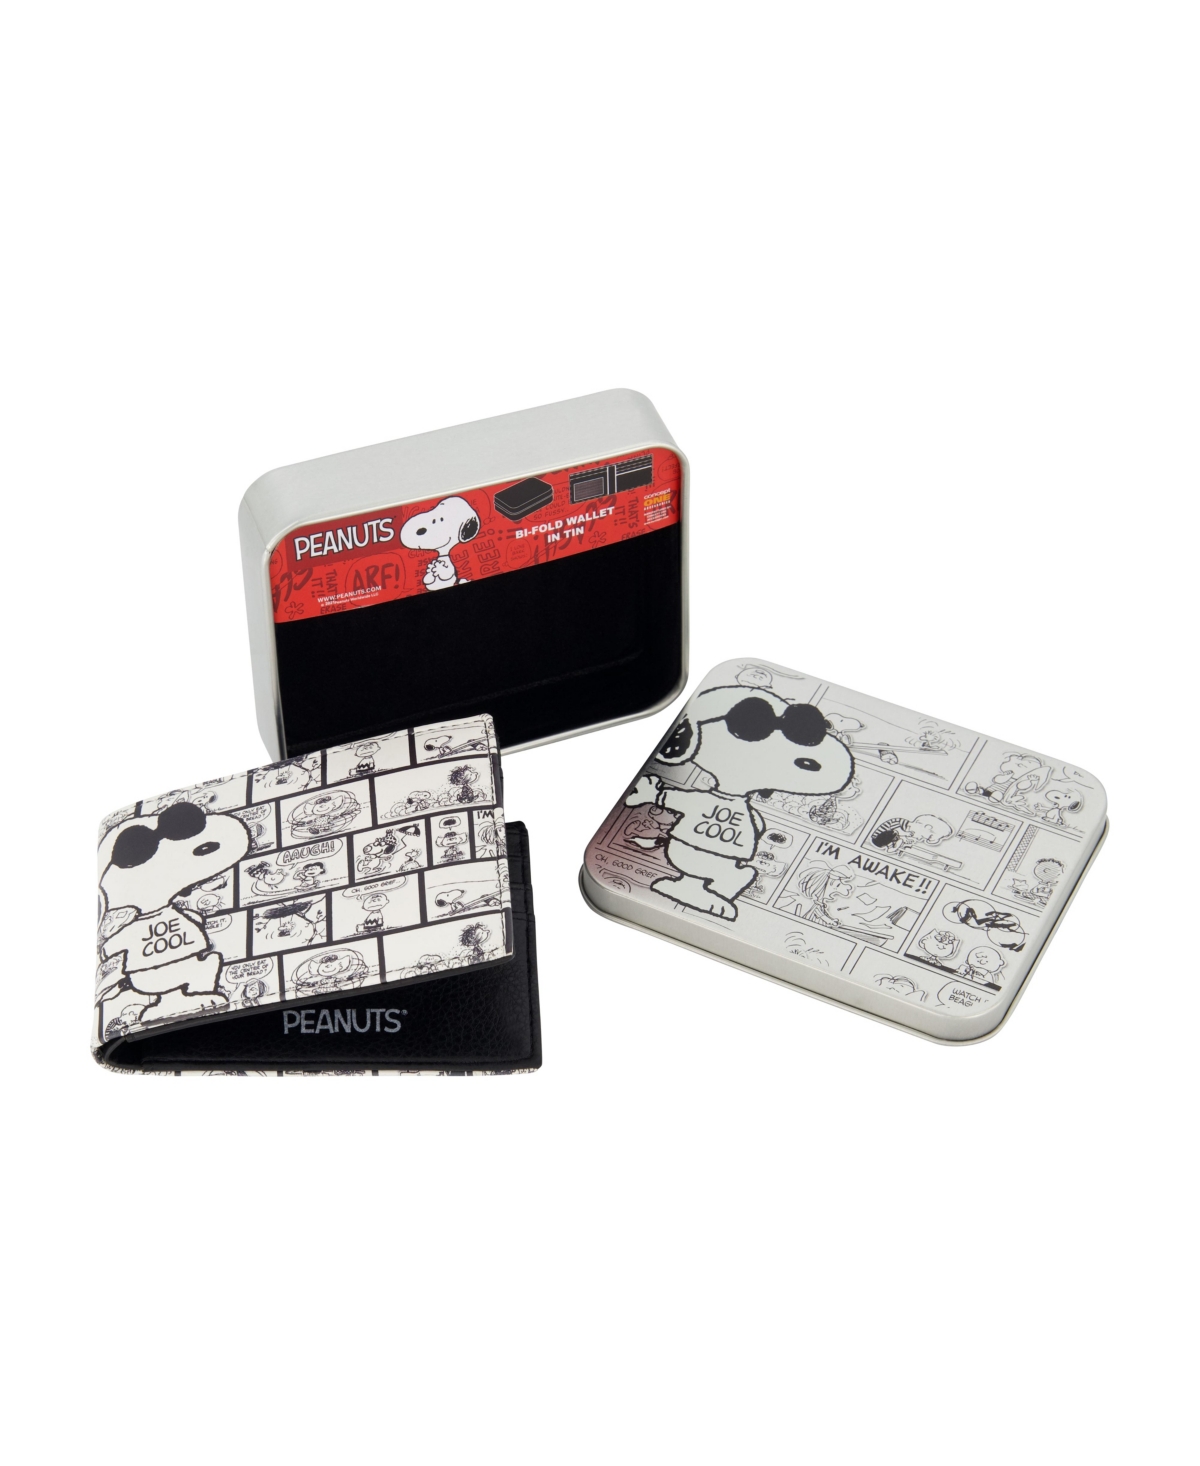 Joe Cool Comic Aop Bifold Wallet, Slim Wallet with Decorative Tin for Men and Women - Multi